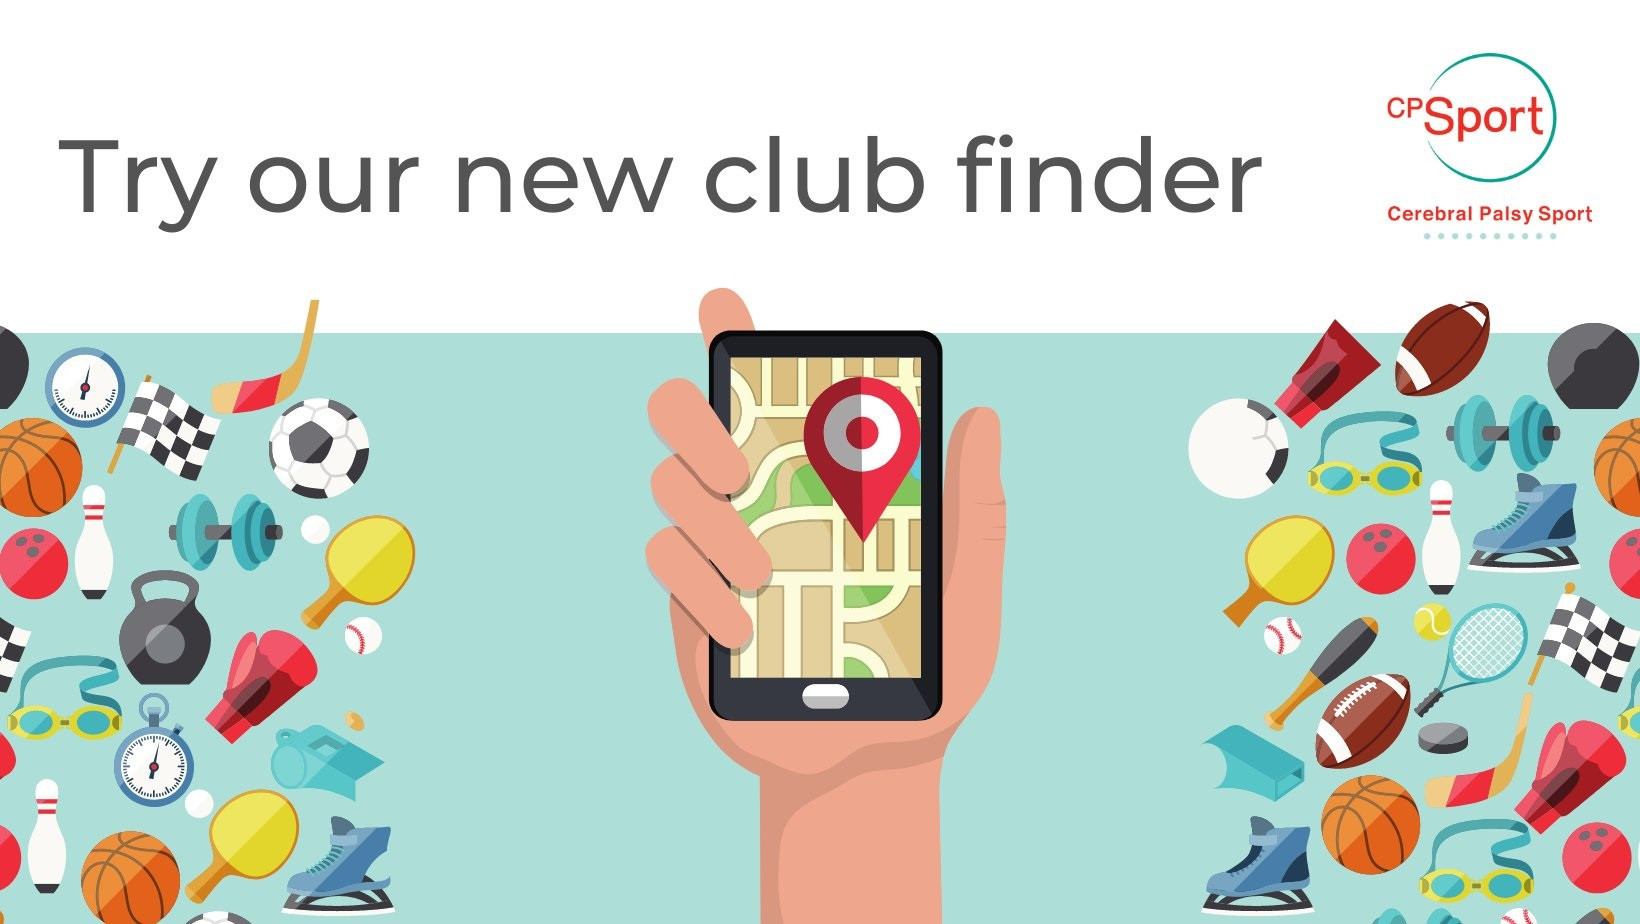 Cerebral Palsy Sport launches new online club finder platform